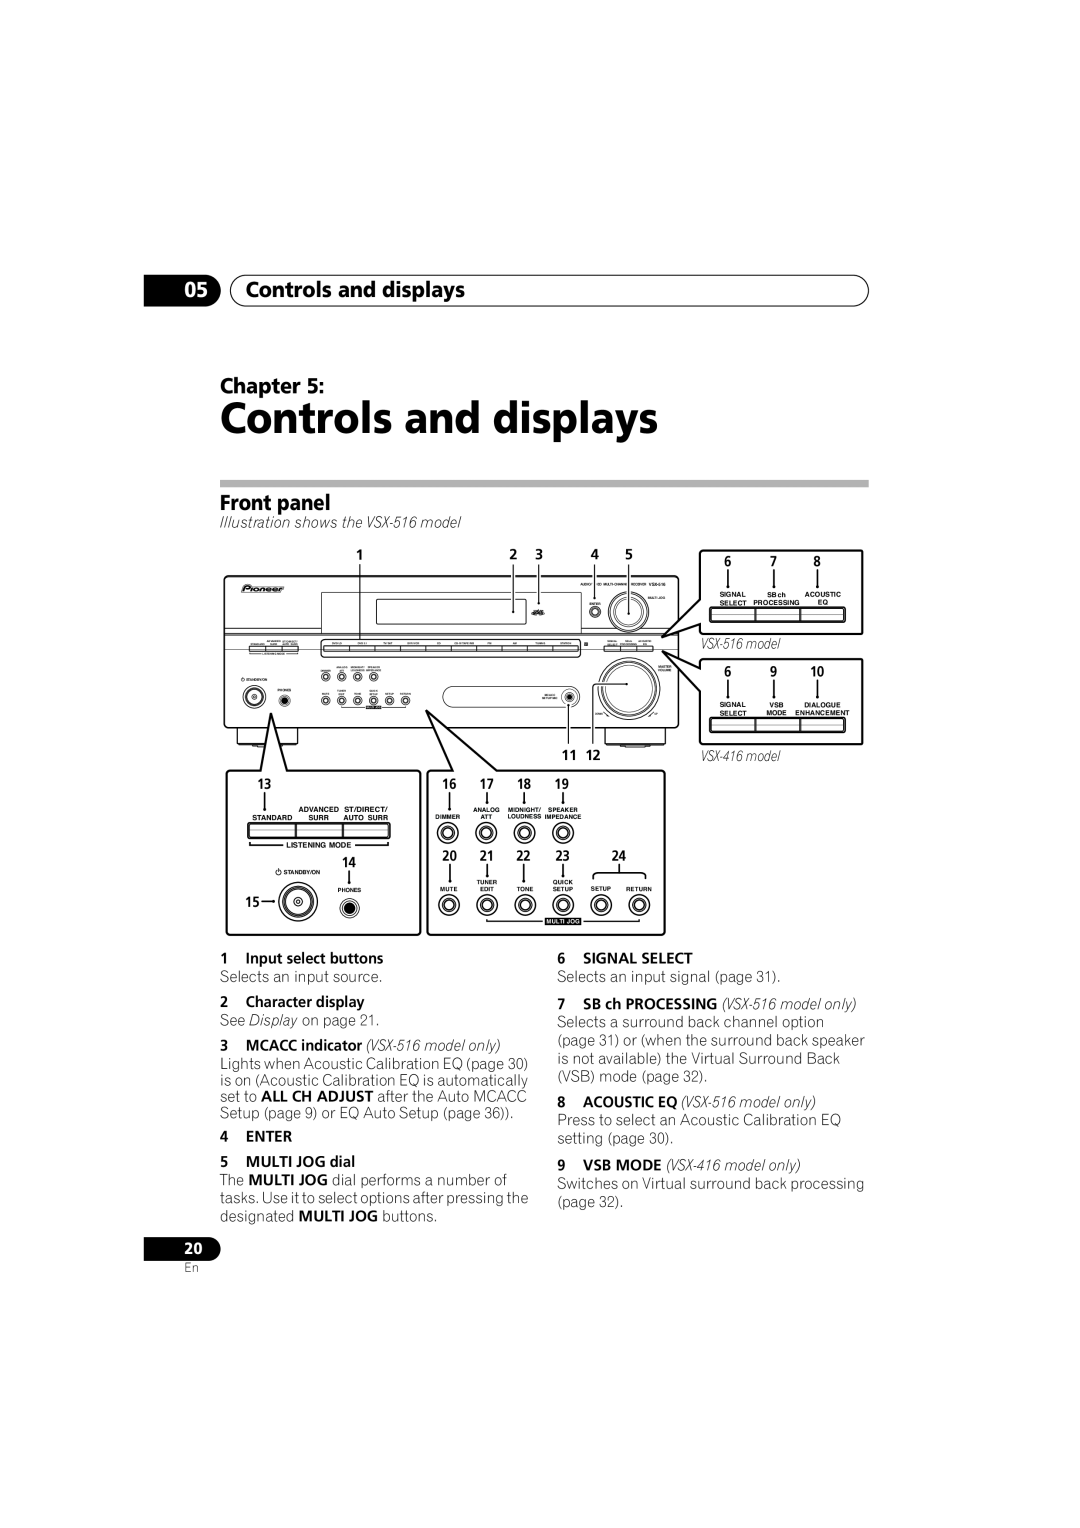 Pioneer VSX-516-S/-K 05Controls and displays Chapter, Front panel, Illustration shows the VSX-516model, VSX-416model 